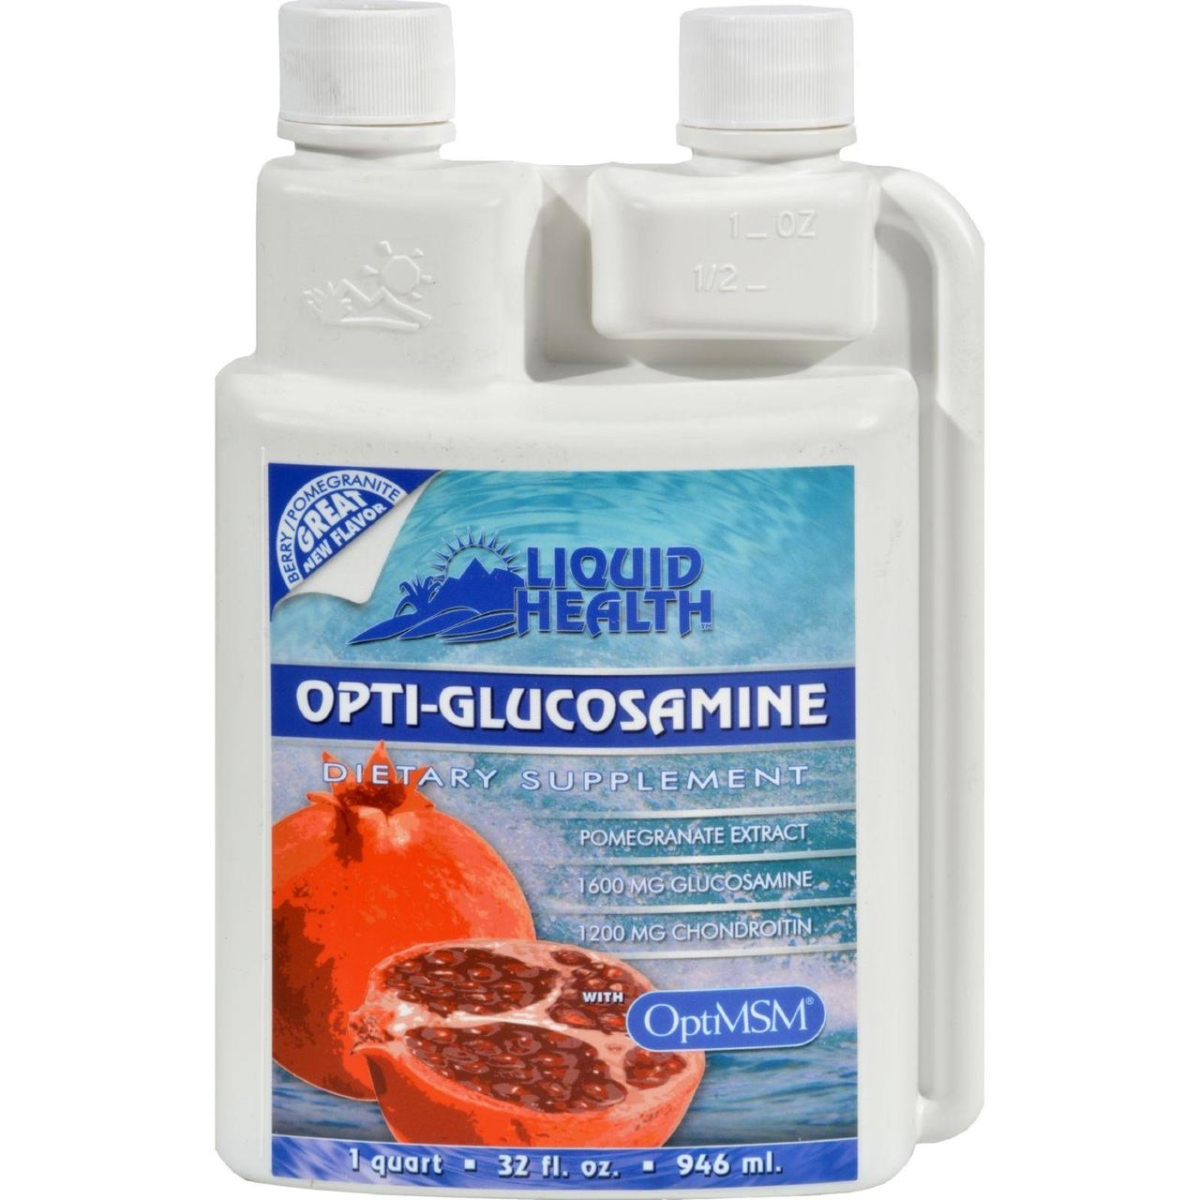 Picture of Liquid Health Products HG0886333 32 fl oz Liquid Health Opti-glucosamine Berry Pomegranate